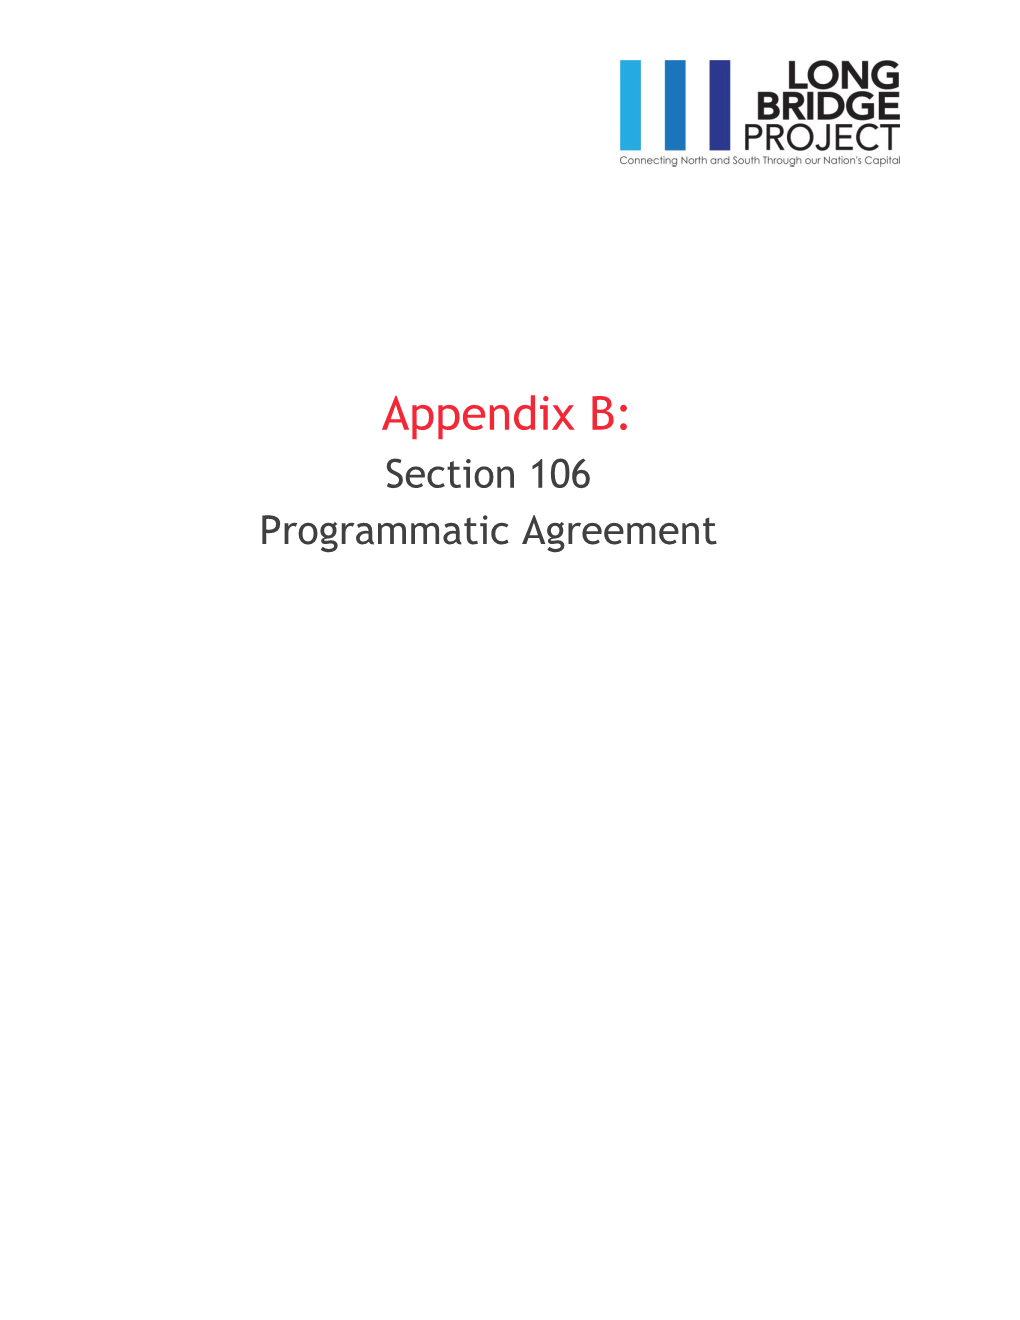 Appendix B: Section 106 Programmatic Agreement